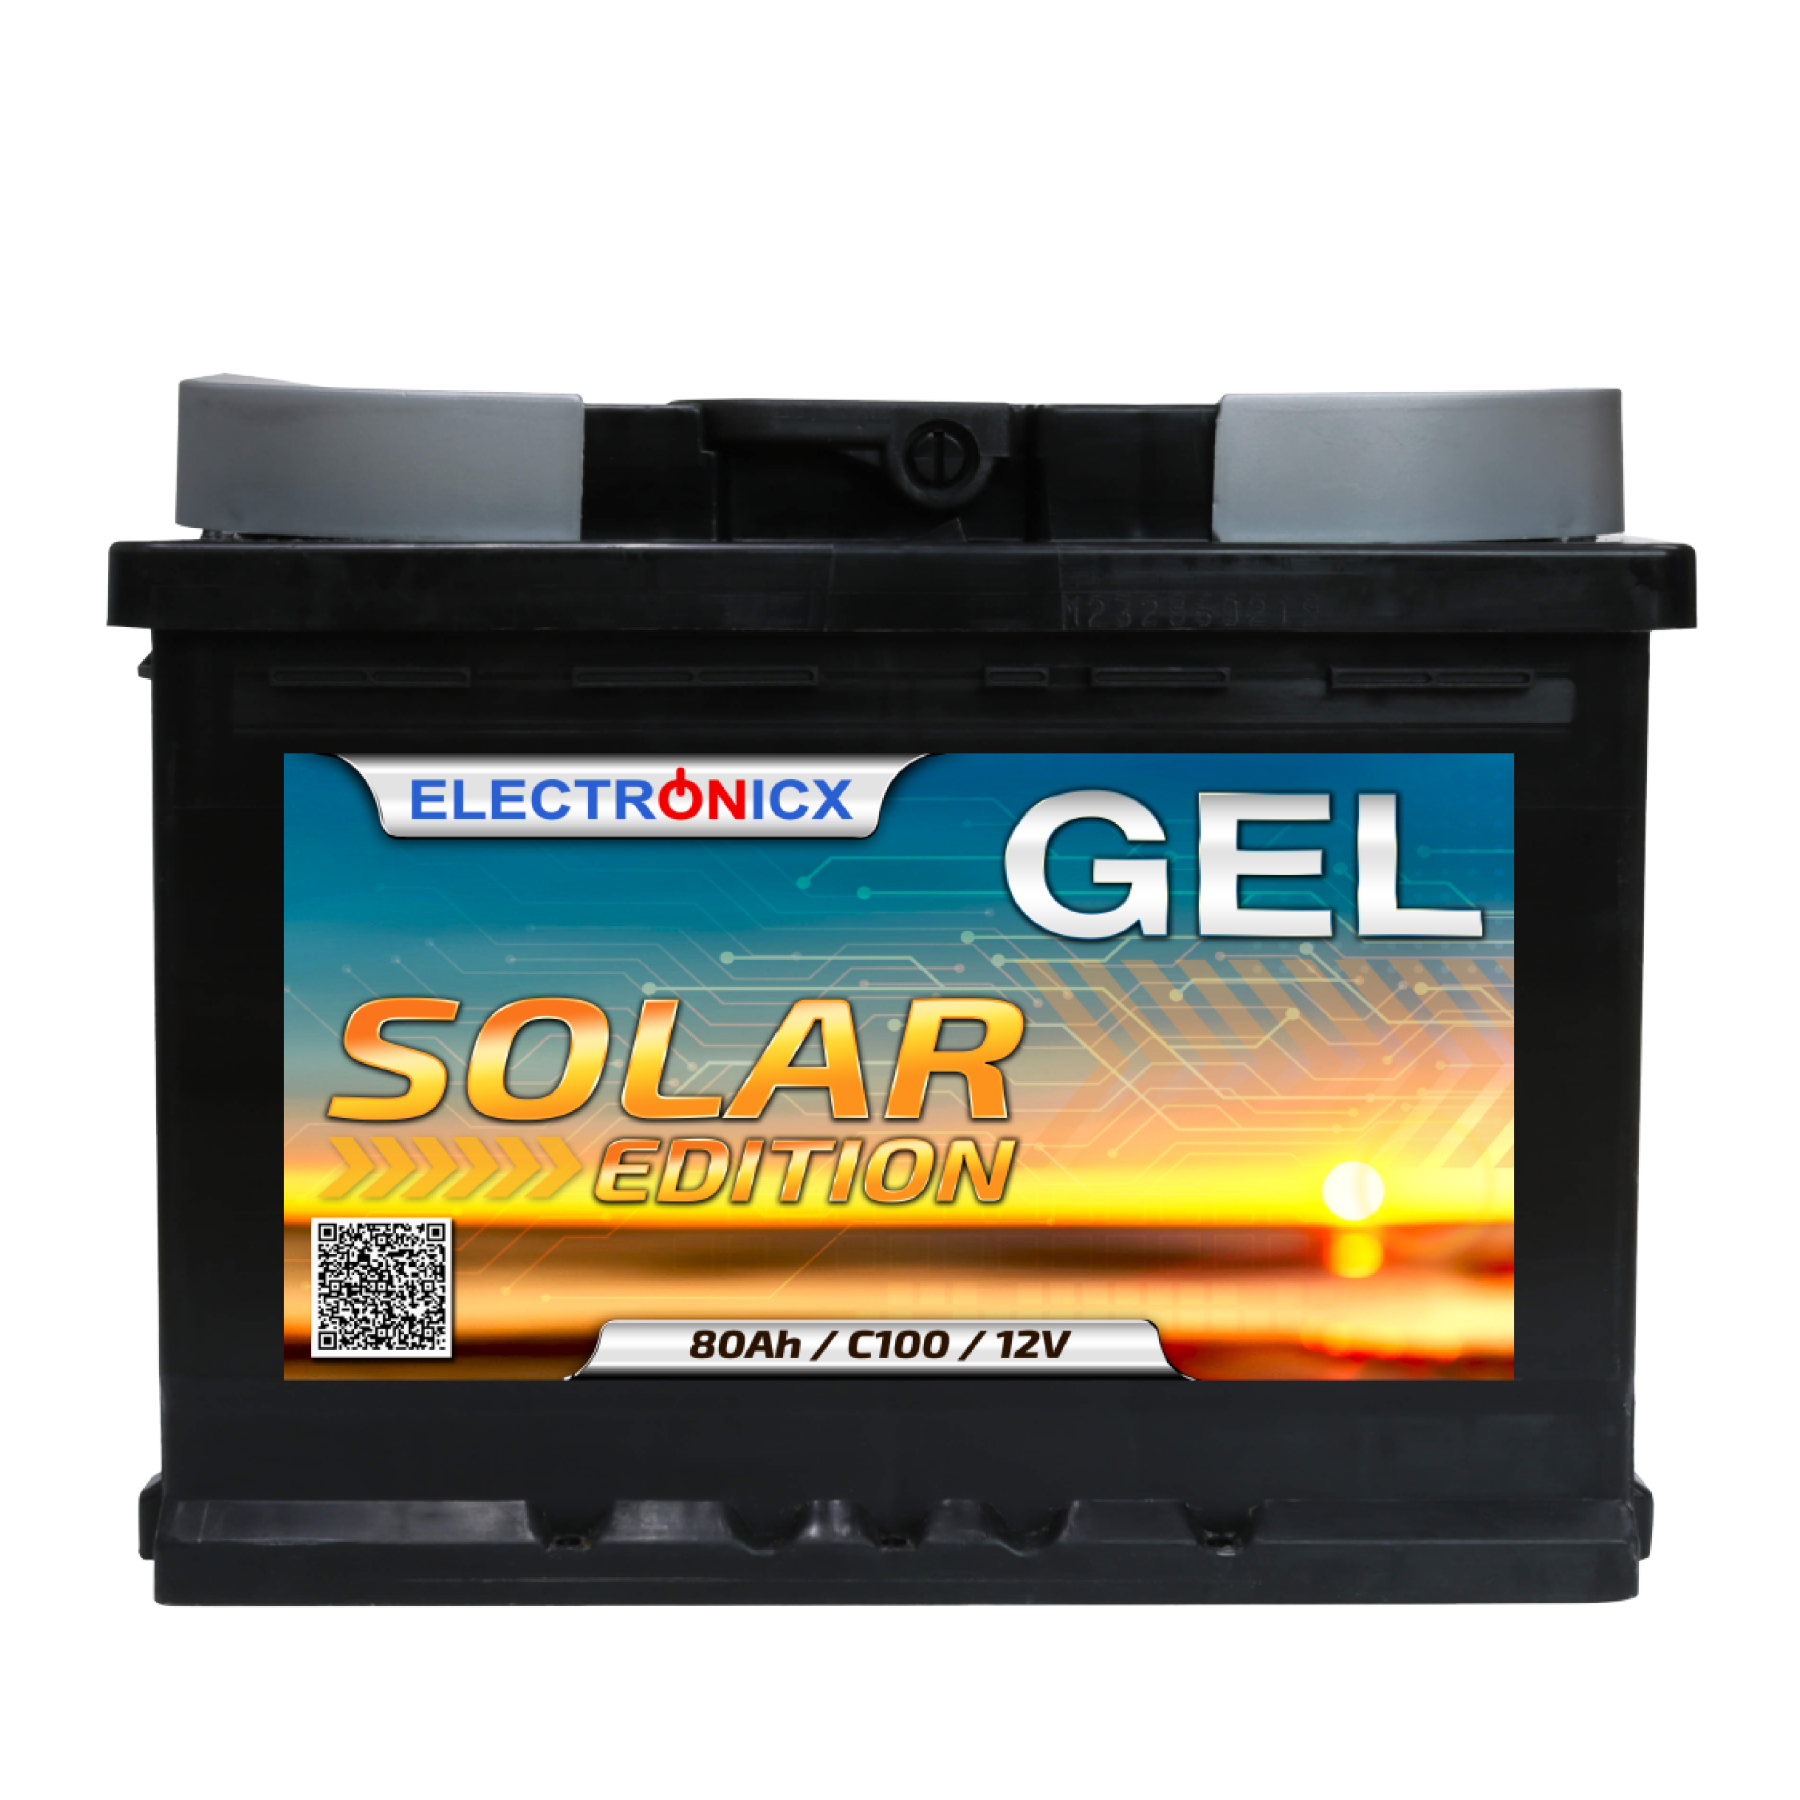 Solarbatterie 12V 80AH Electronicx Solar Edition AGM Batterie Solar Akku  Versorgungsbatterie stromspeicher photovoltaik Camping Solaranlage  Gartenhaus…